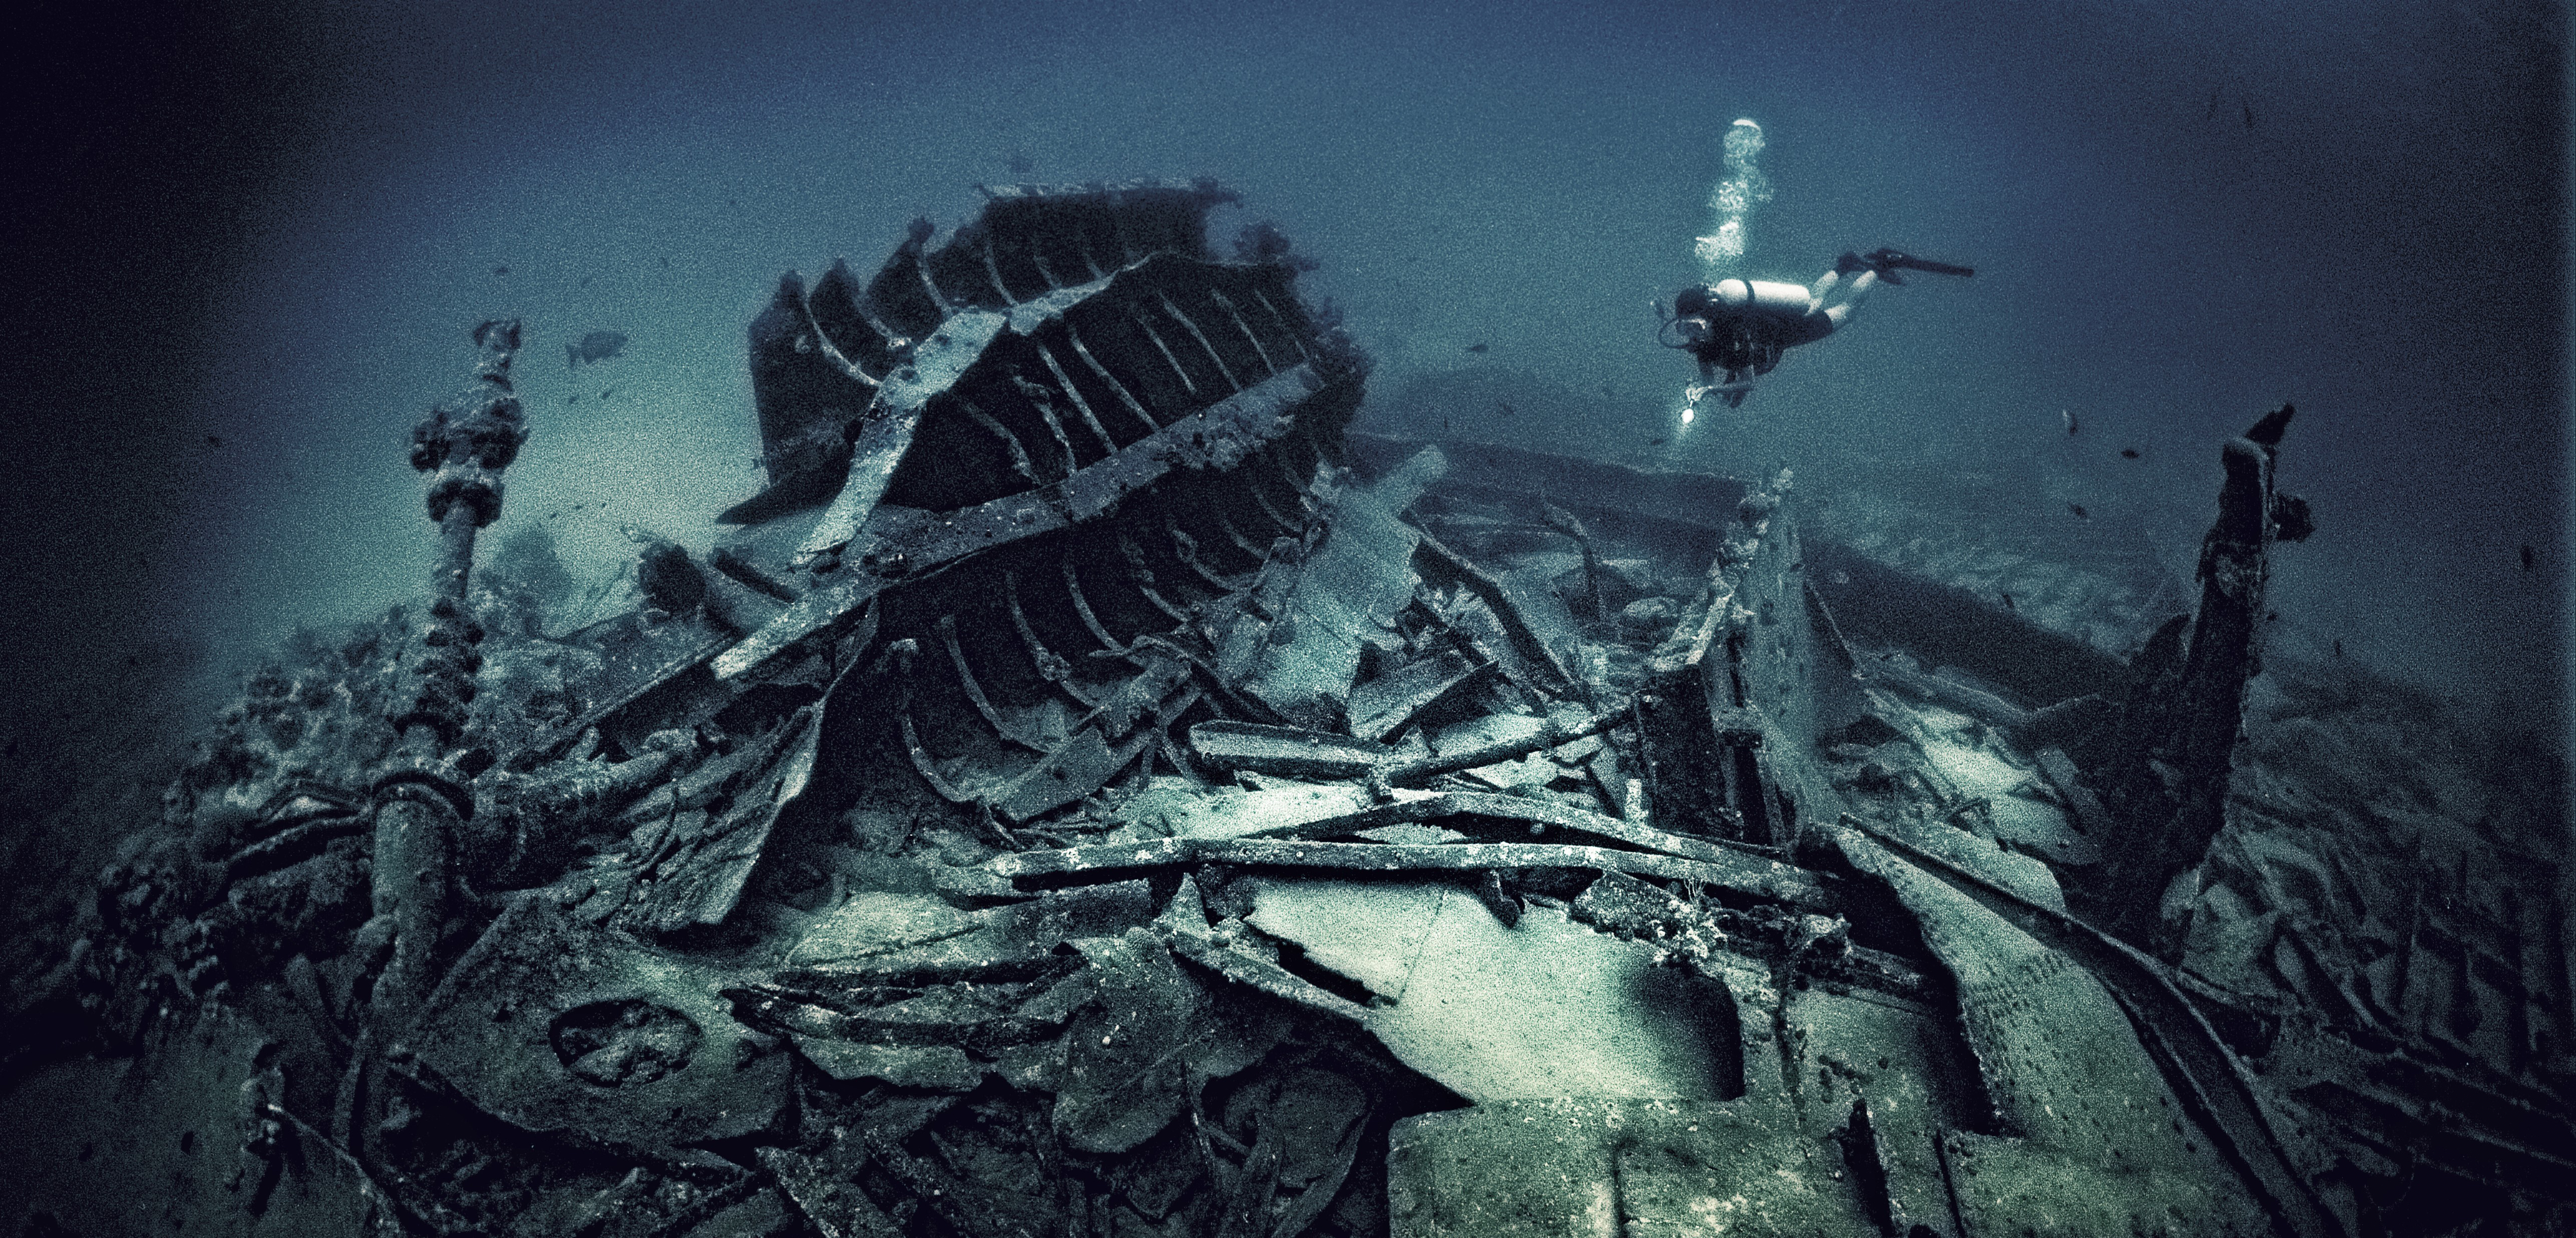 The Caribbean Sea is littered with shipwrecks. Photo by Julian Calverley/Corbis